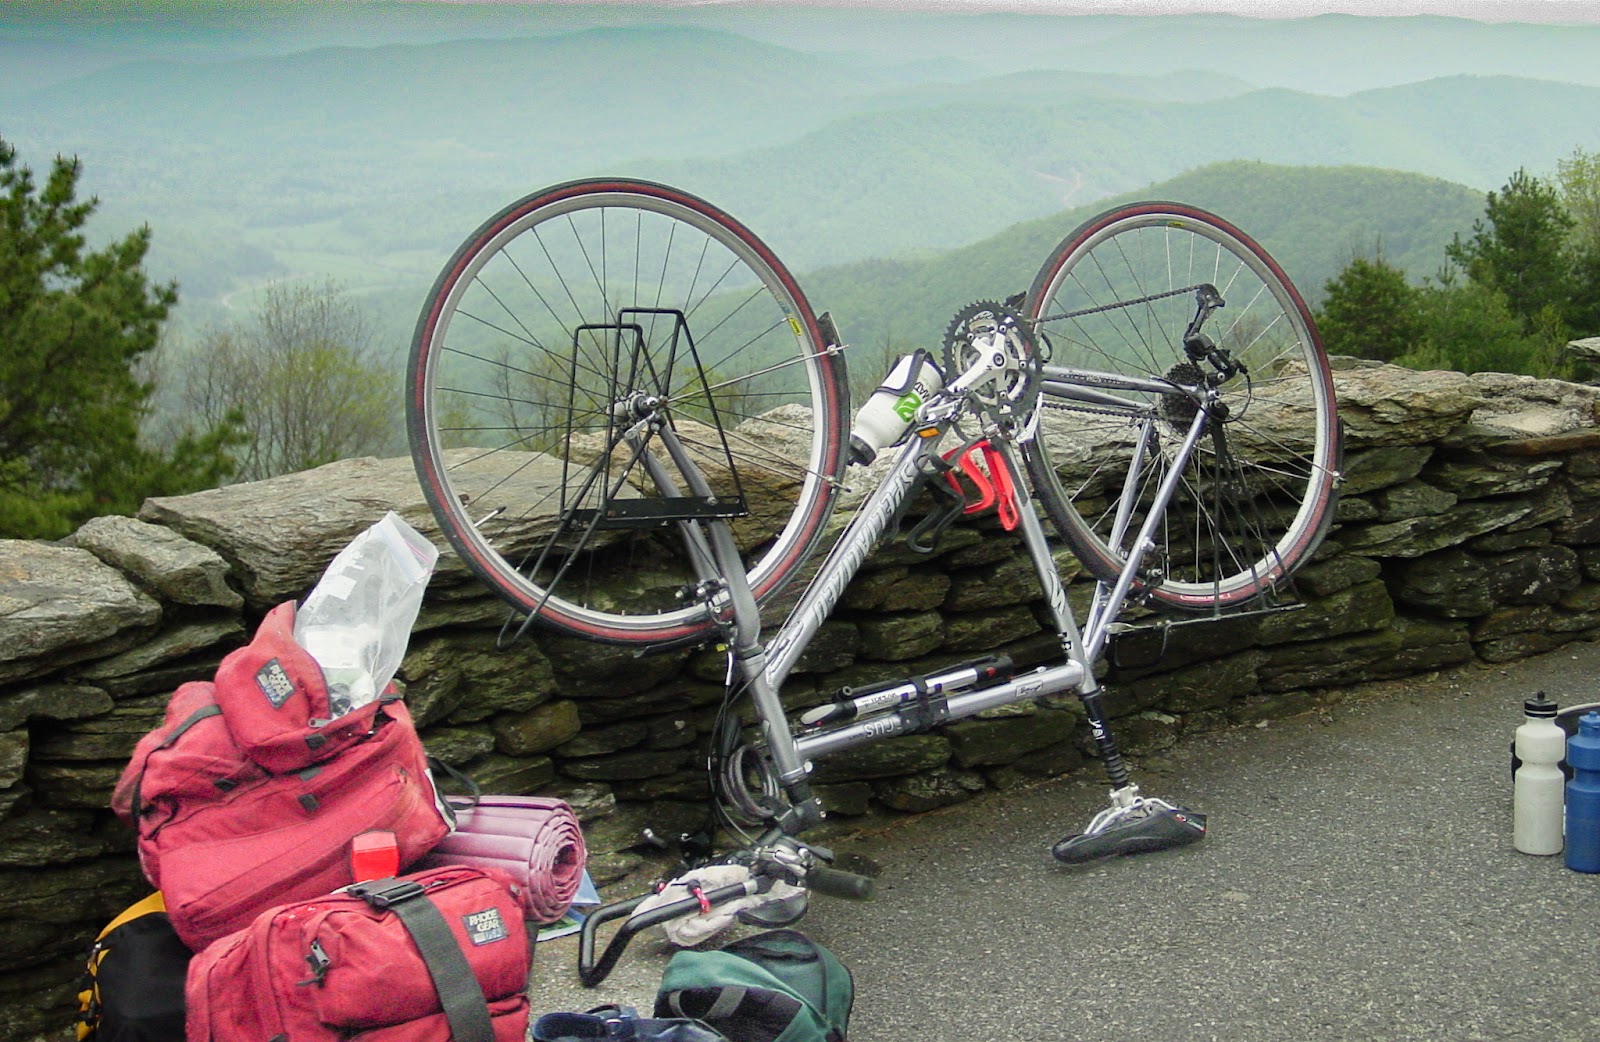 A bike turned upside down along a rocky overlook.